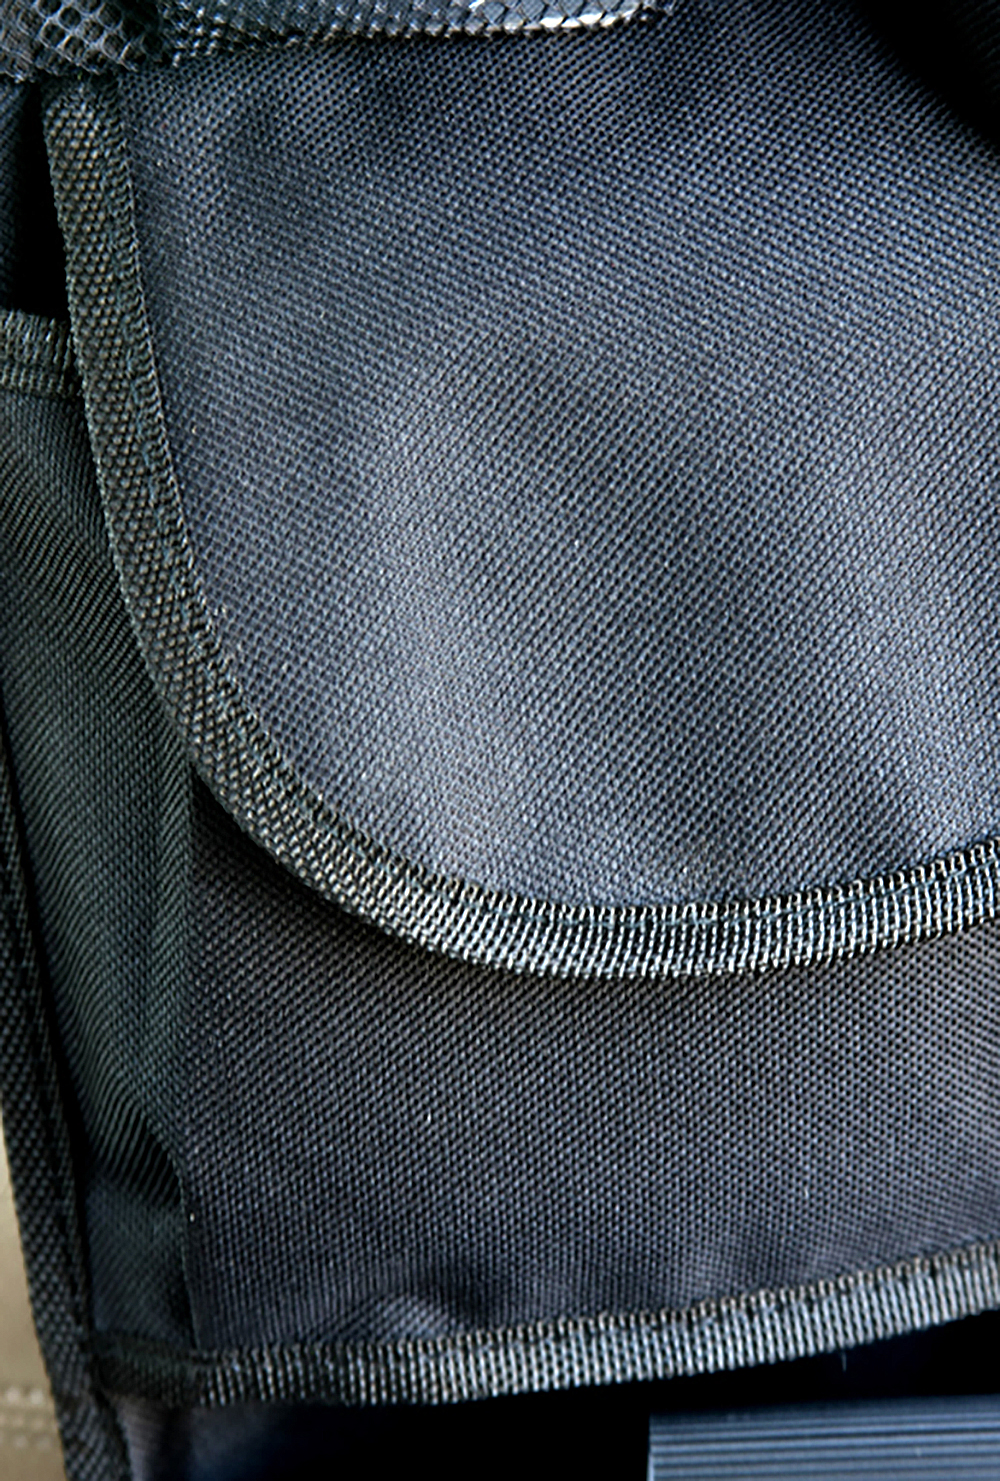 YupbizAuto Car Auto Front/Back Seat Organizer Cell Phone Holder Multi-Pocket Travel Storage Bag, Black Color - image 2 of 6